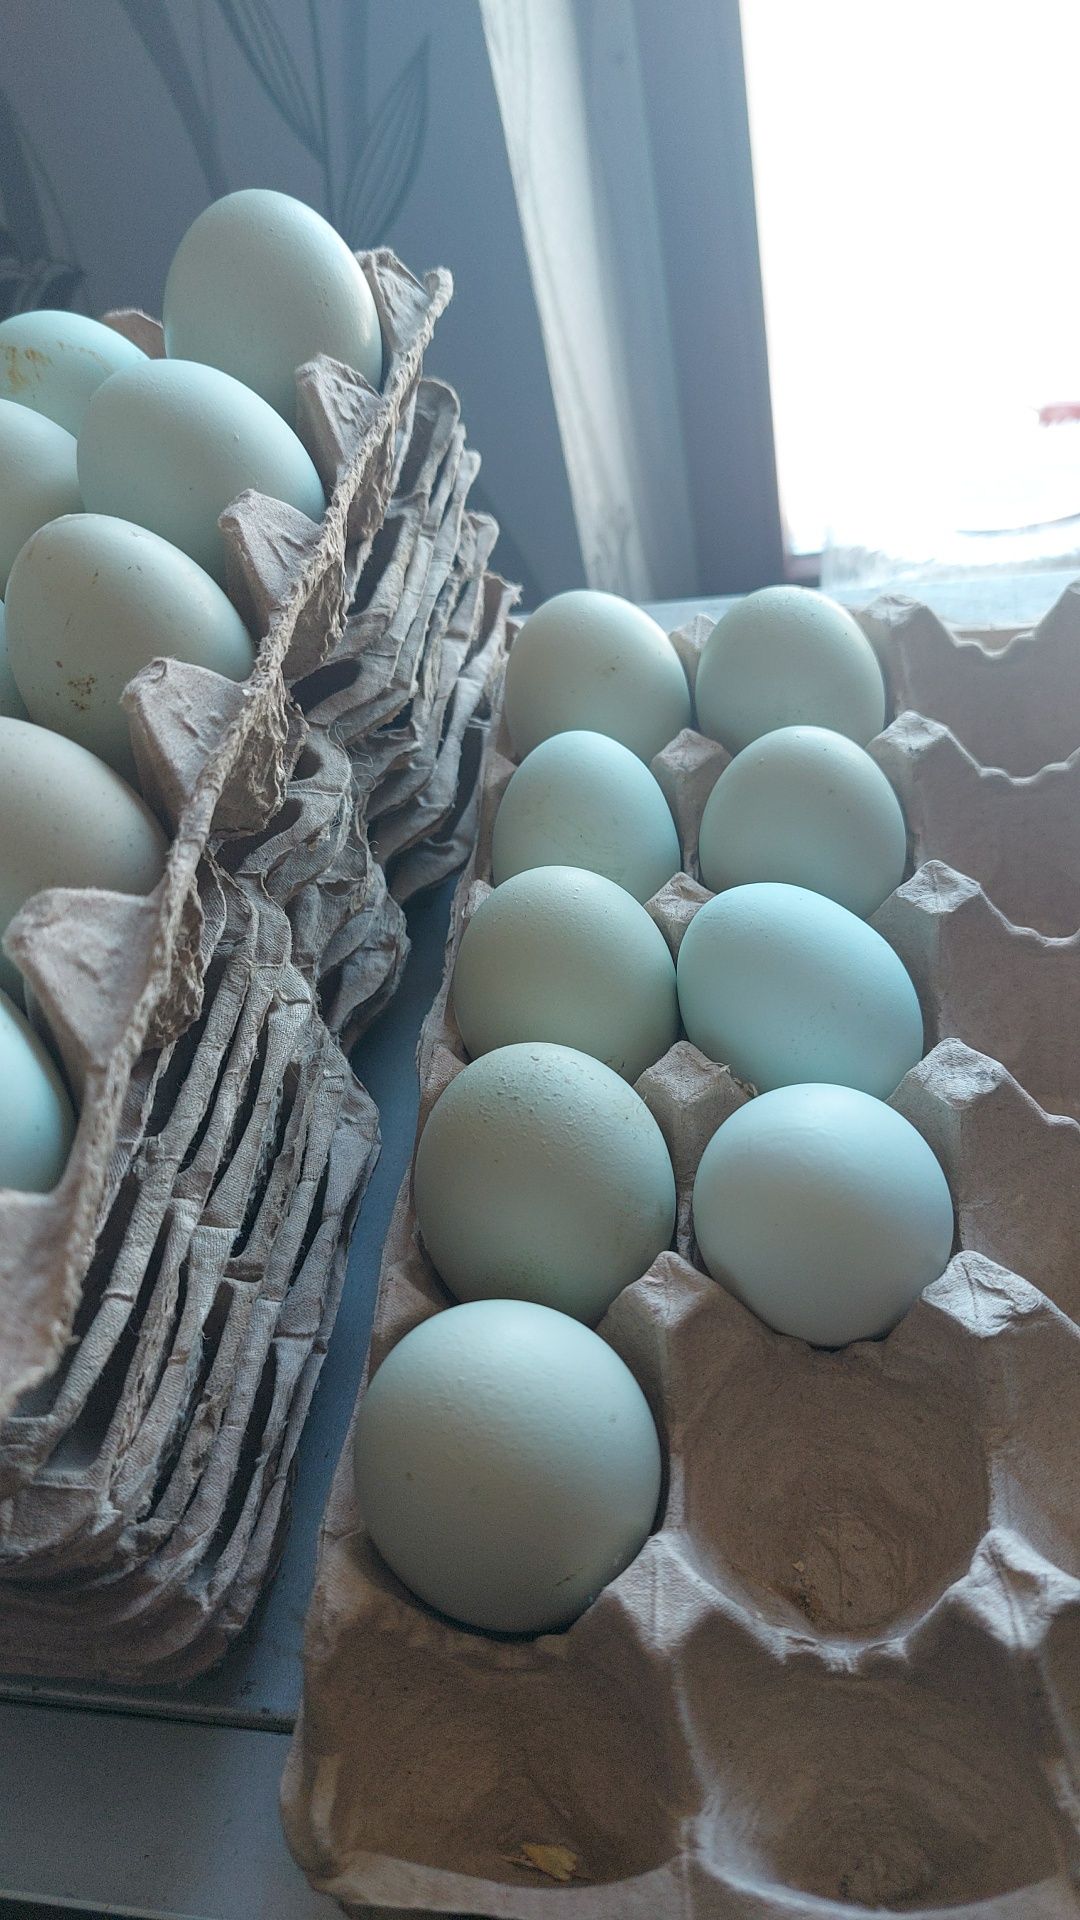 Инкубационное яйцо Легбар, голубое яйца: 400 тг. - Птицы Караганда на Olx